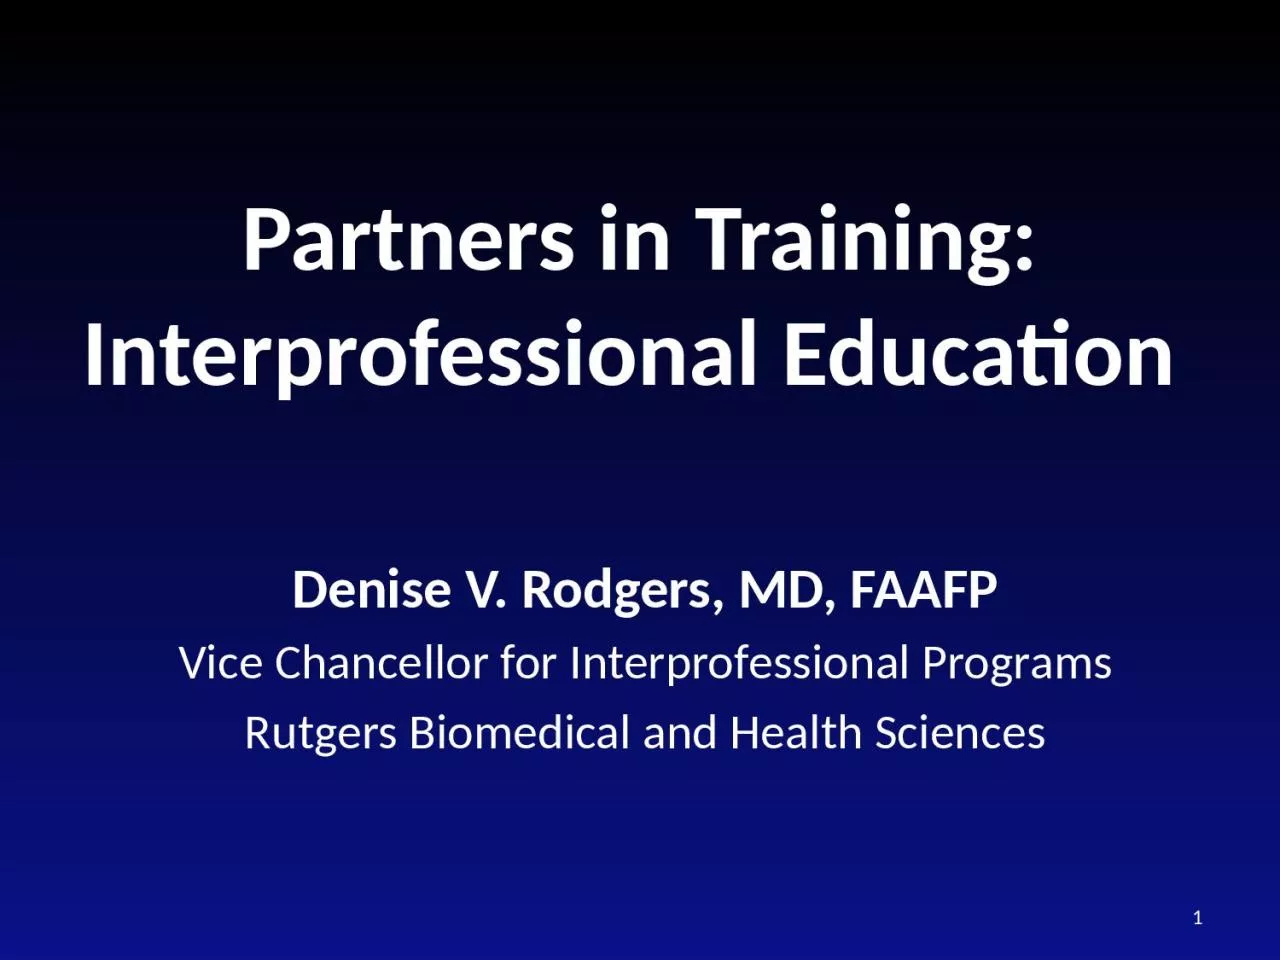 Partners in Training: Interprofessional Education